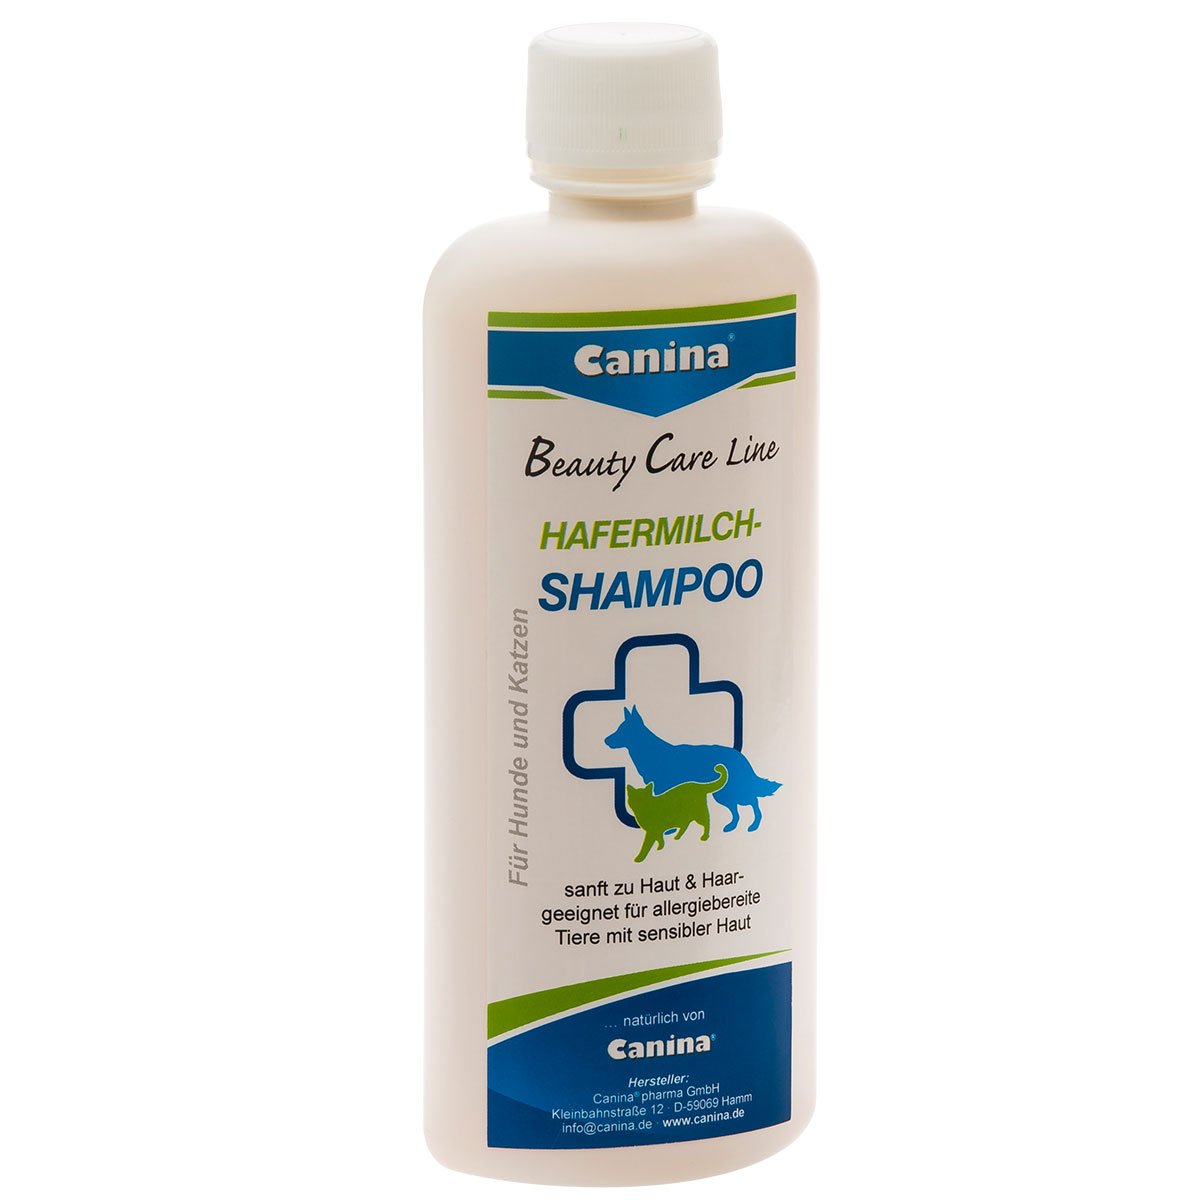 Canina Hafermilch Shampoo 250ml von Canina Pharma